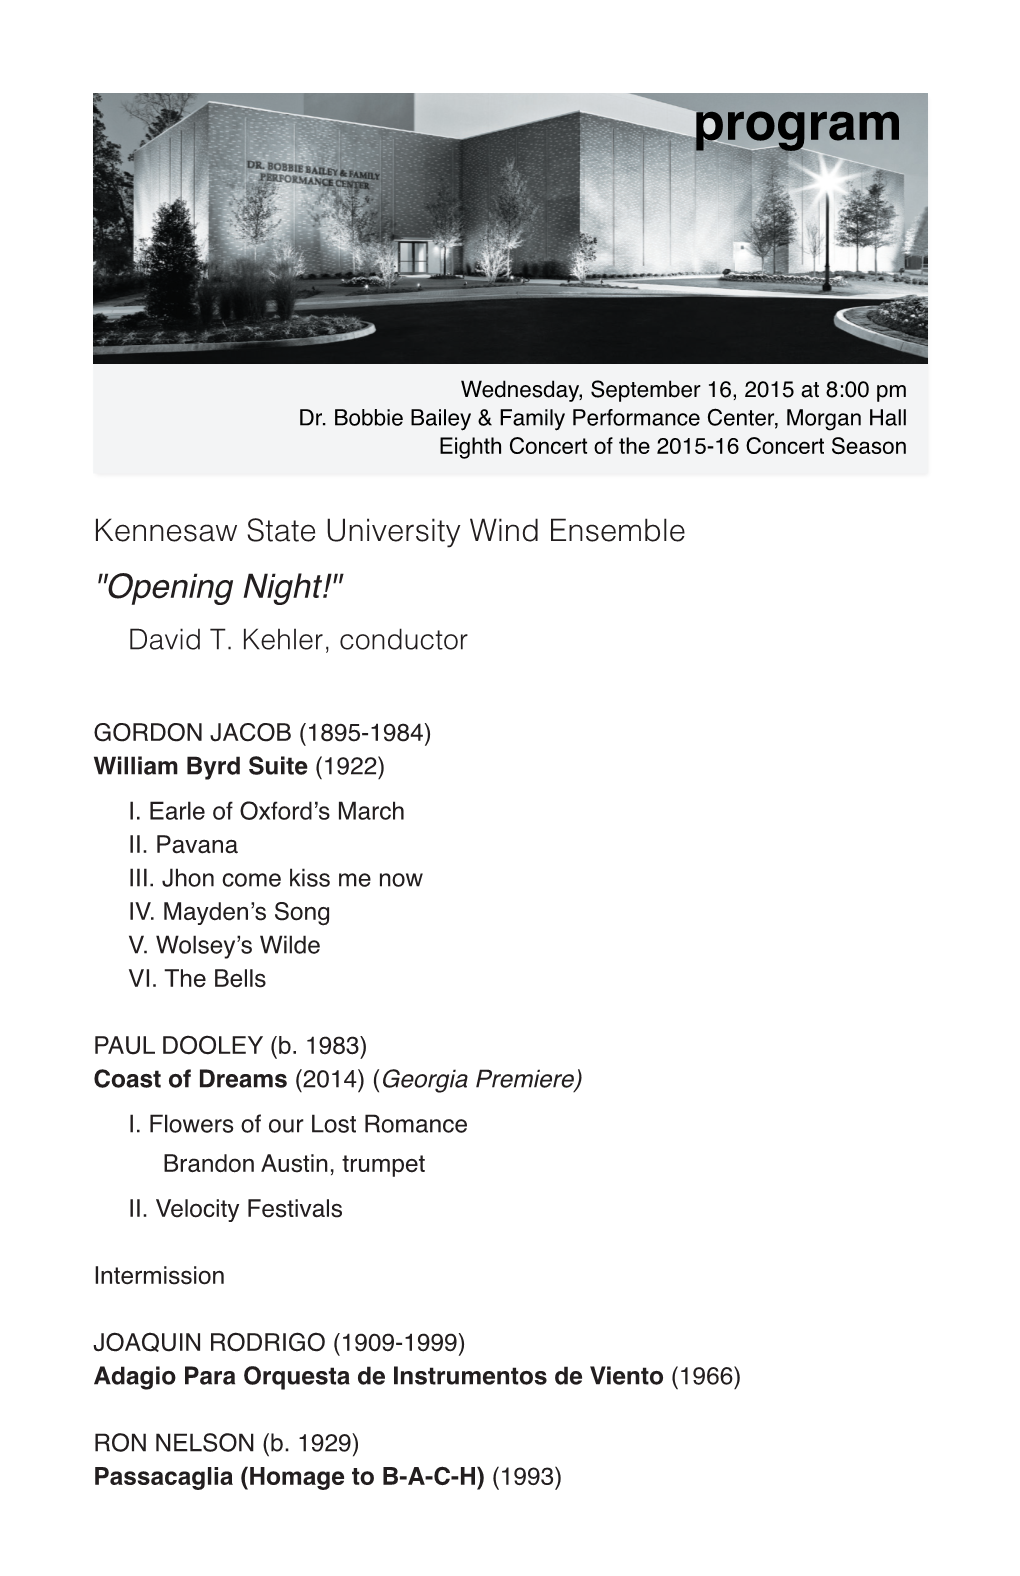 KSU Wind Ensemble, "Opening Night"